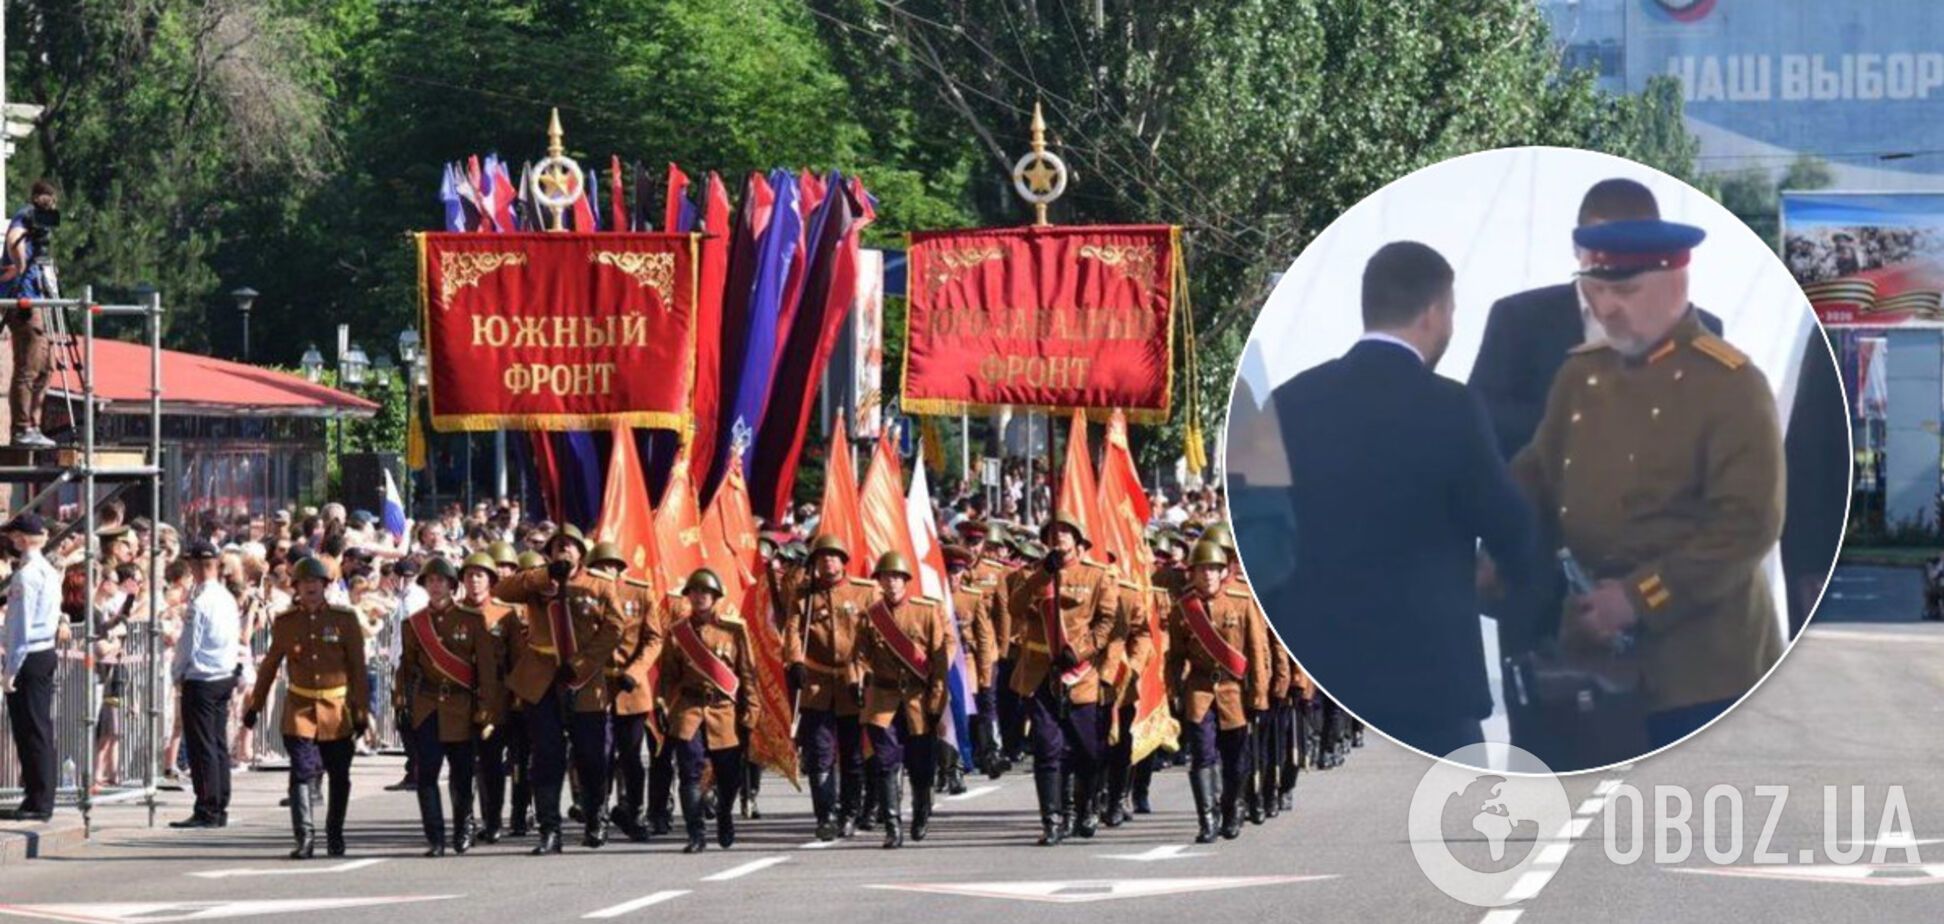 На 'парад' в Донецке охранник Пушилина надел форму НКВД